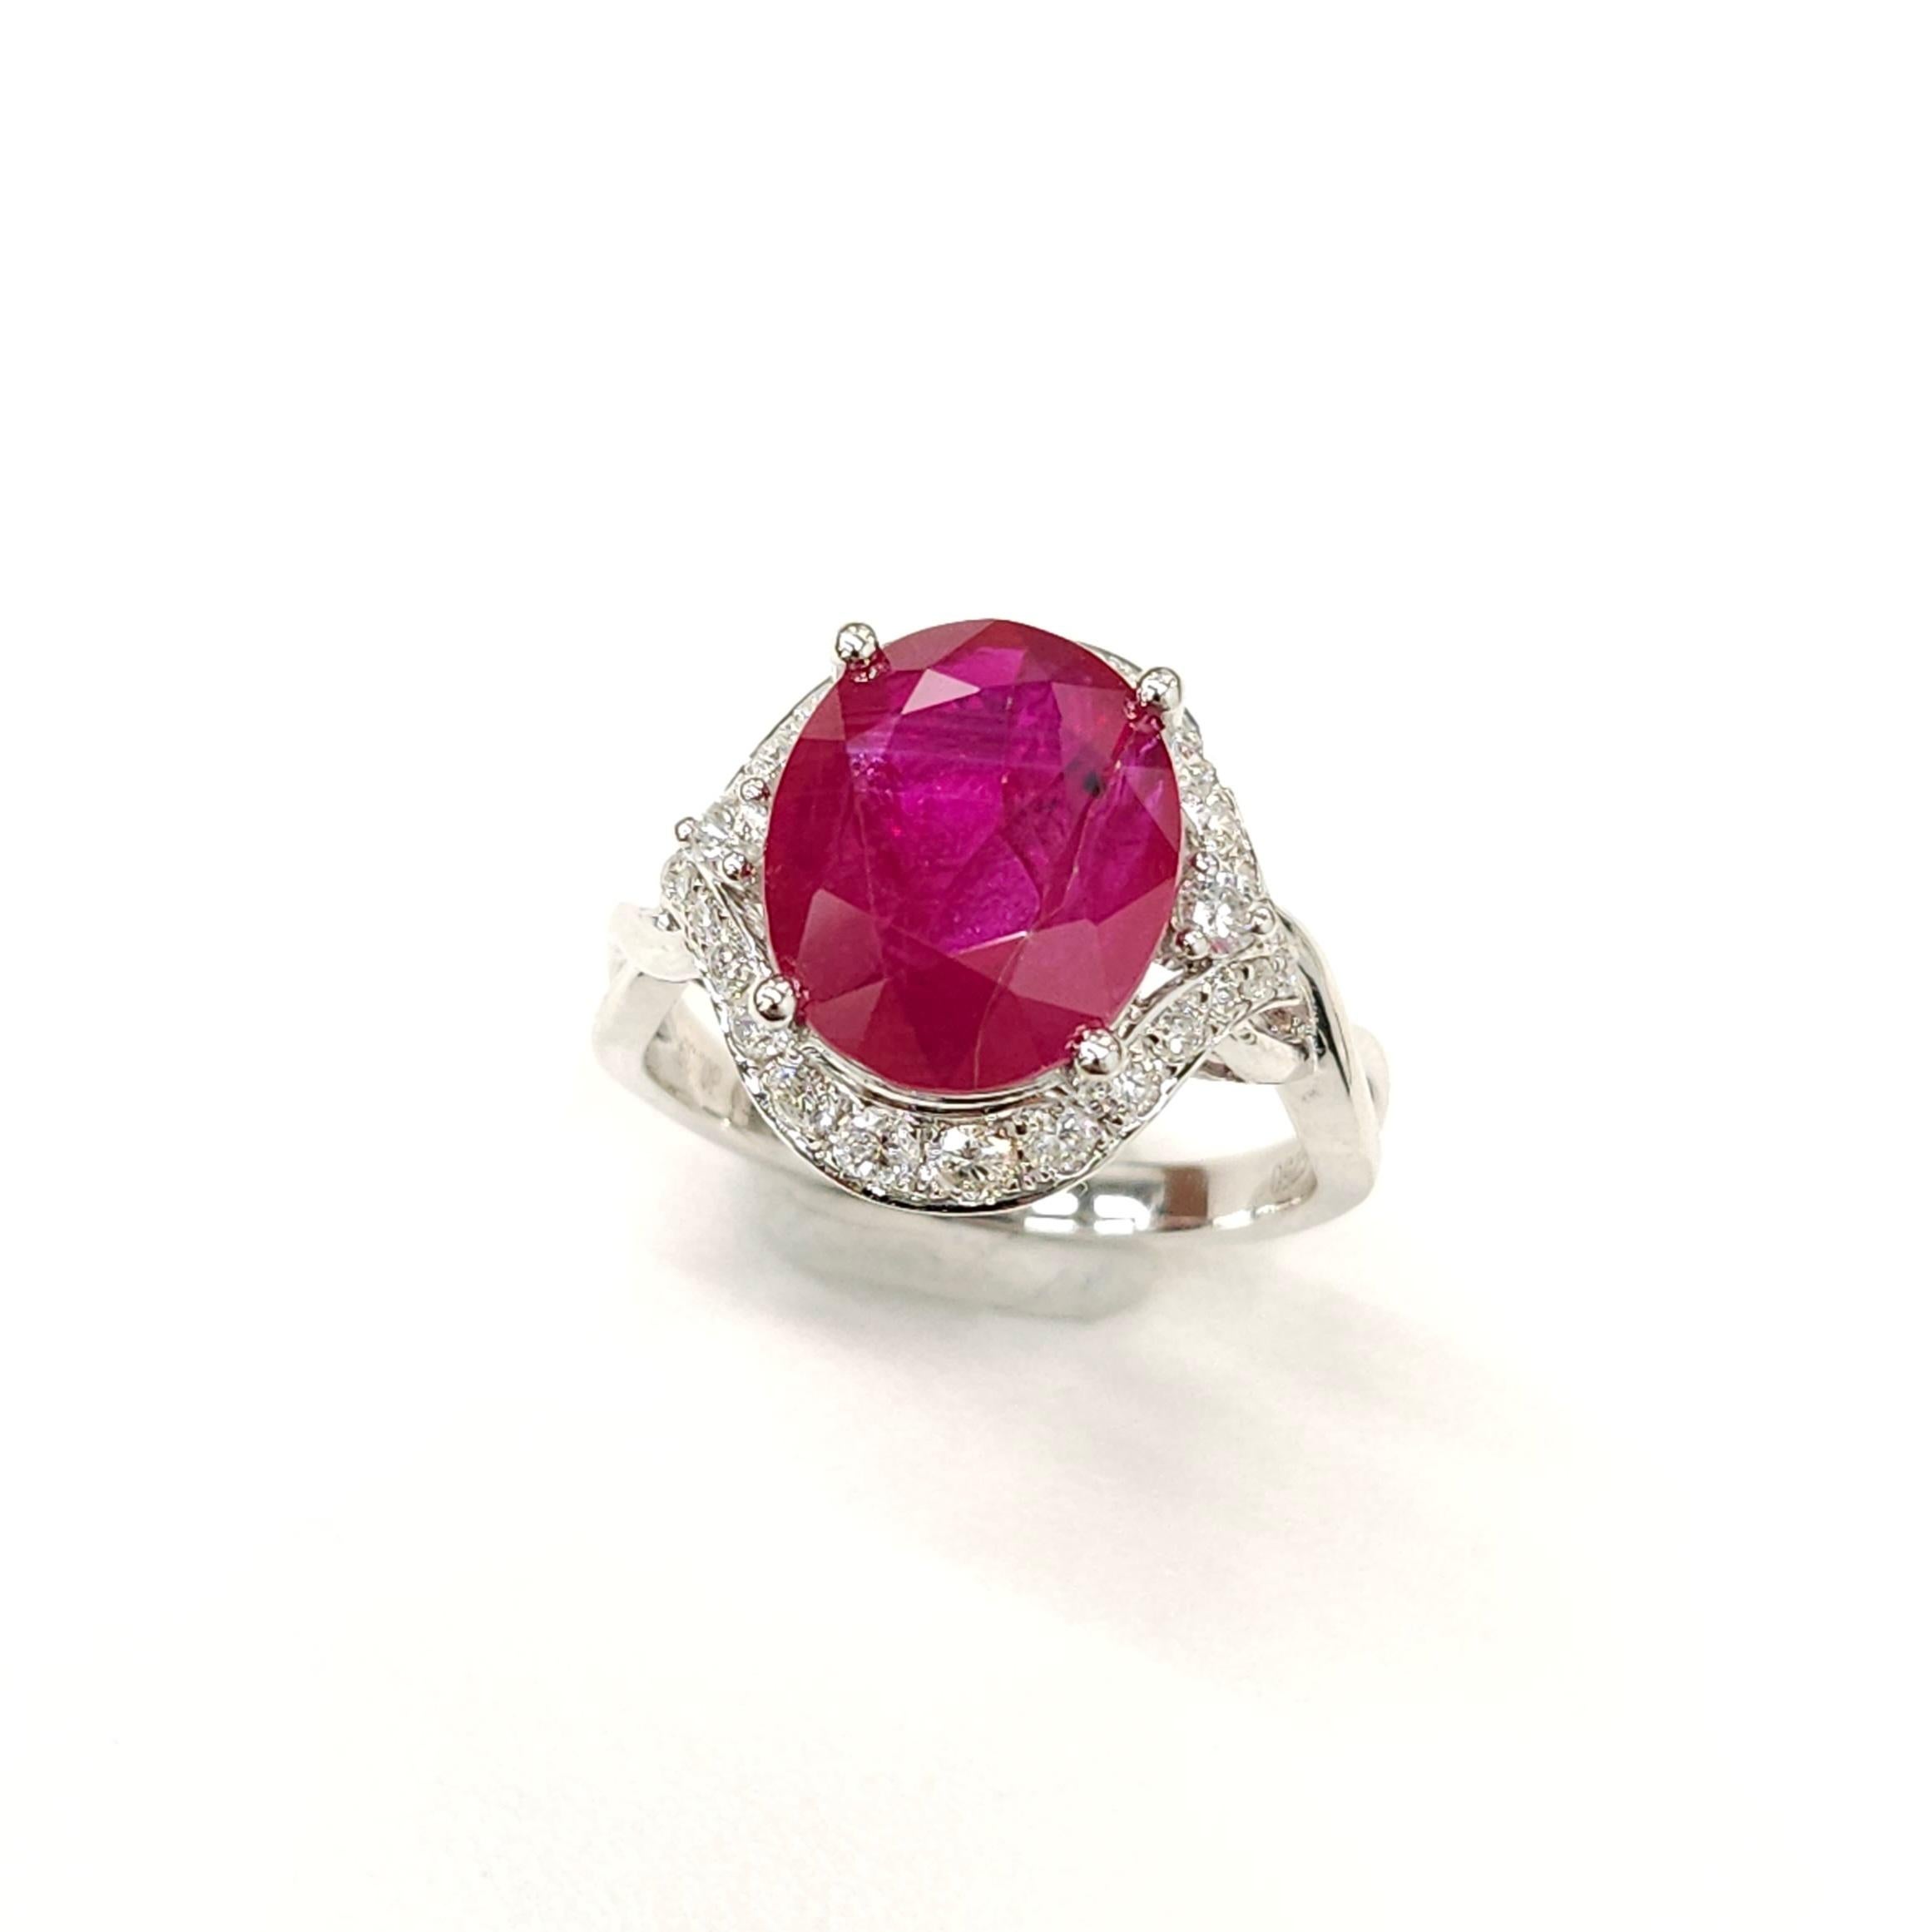 IGI Certified 4.59 Carat Burma Ruby & Diamond Ring in 18K White Gold For Sale 1